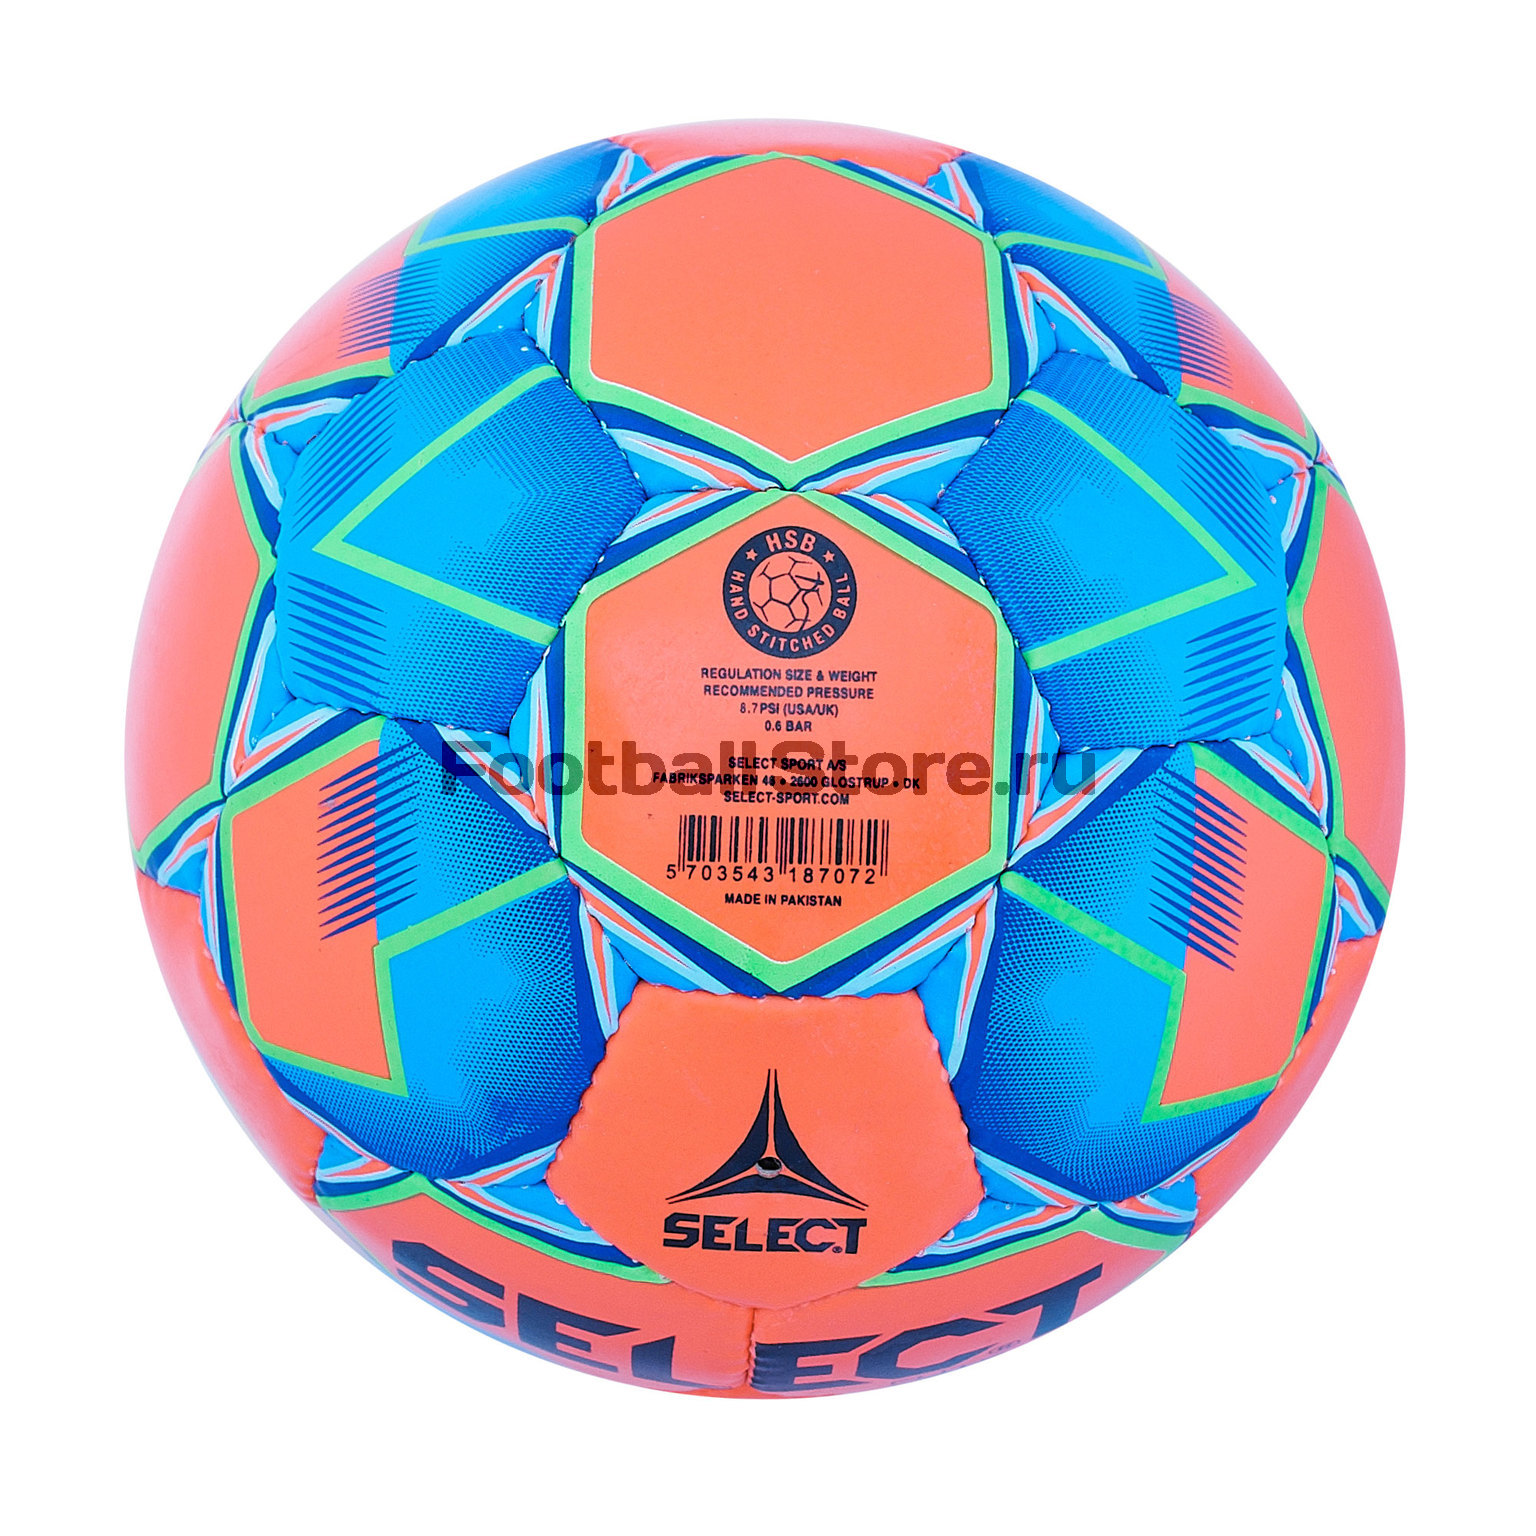 Футзальный мяч Select Futsal Street 850218-552